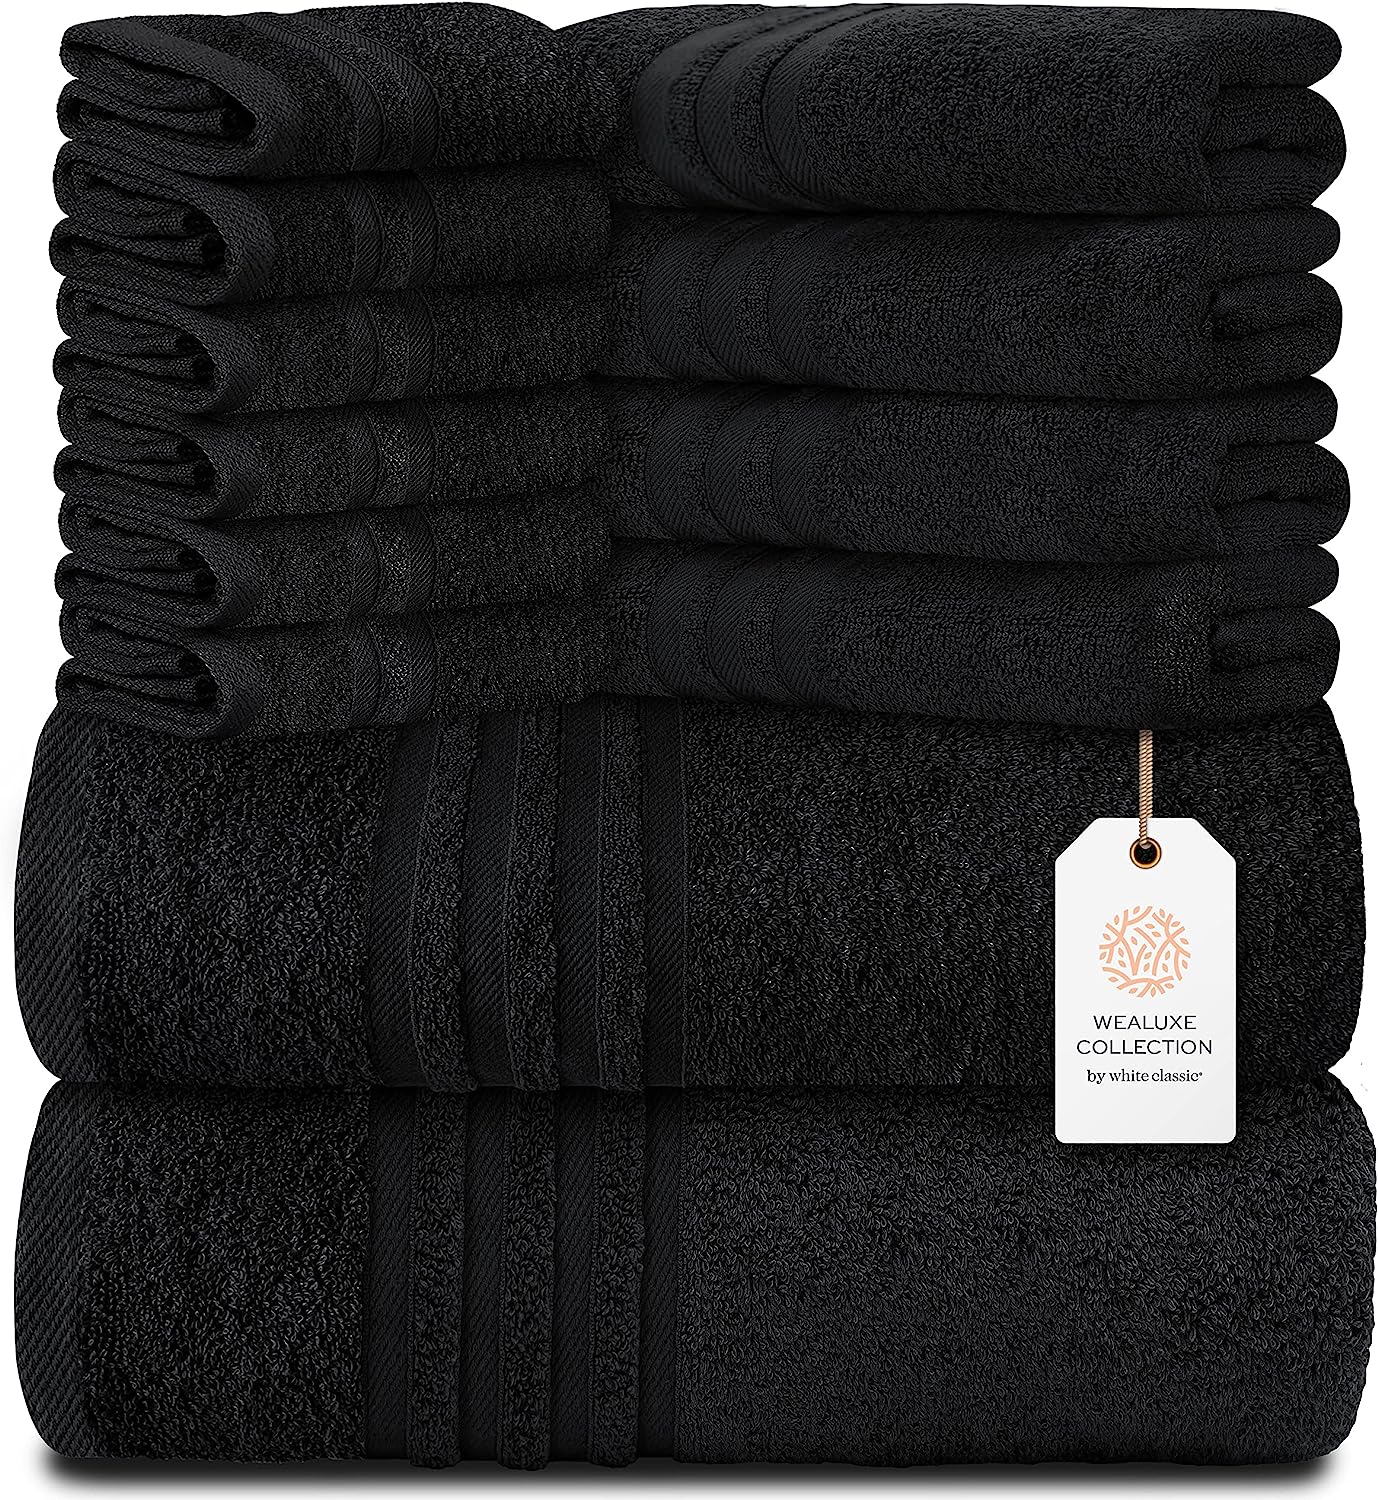 Welauxe Collection 8Pc Black Towel Set